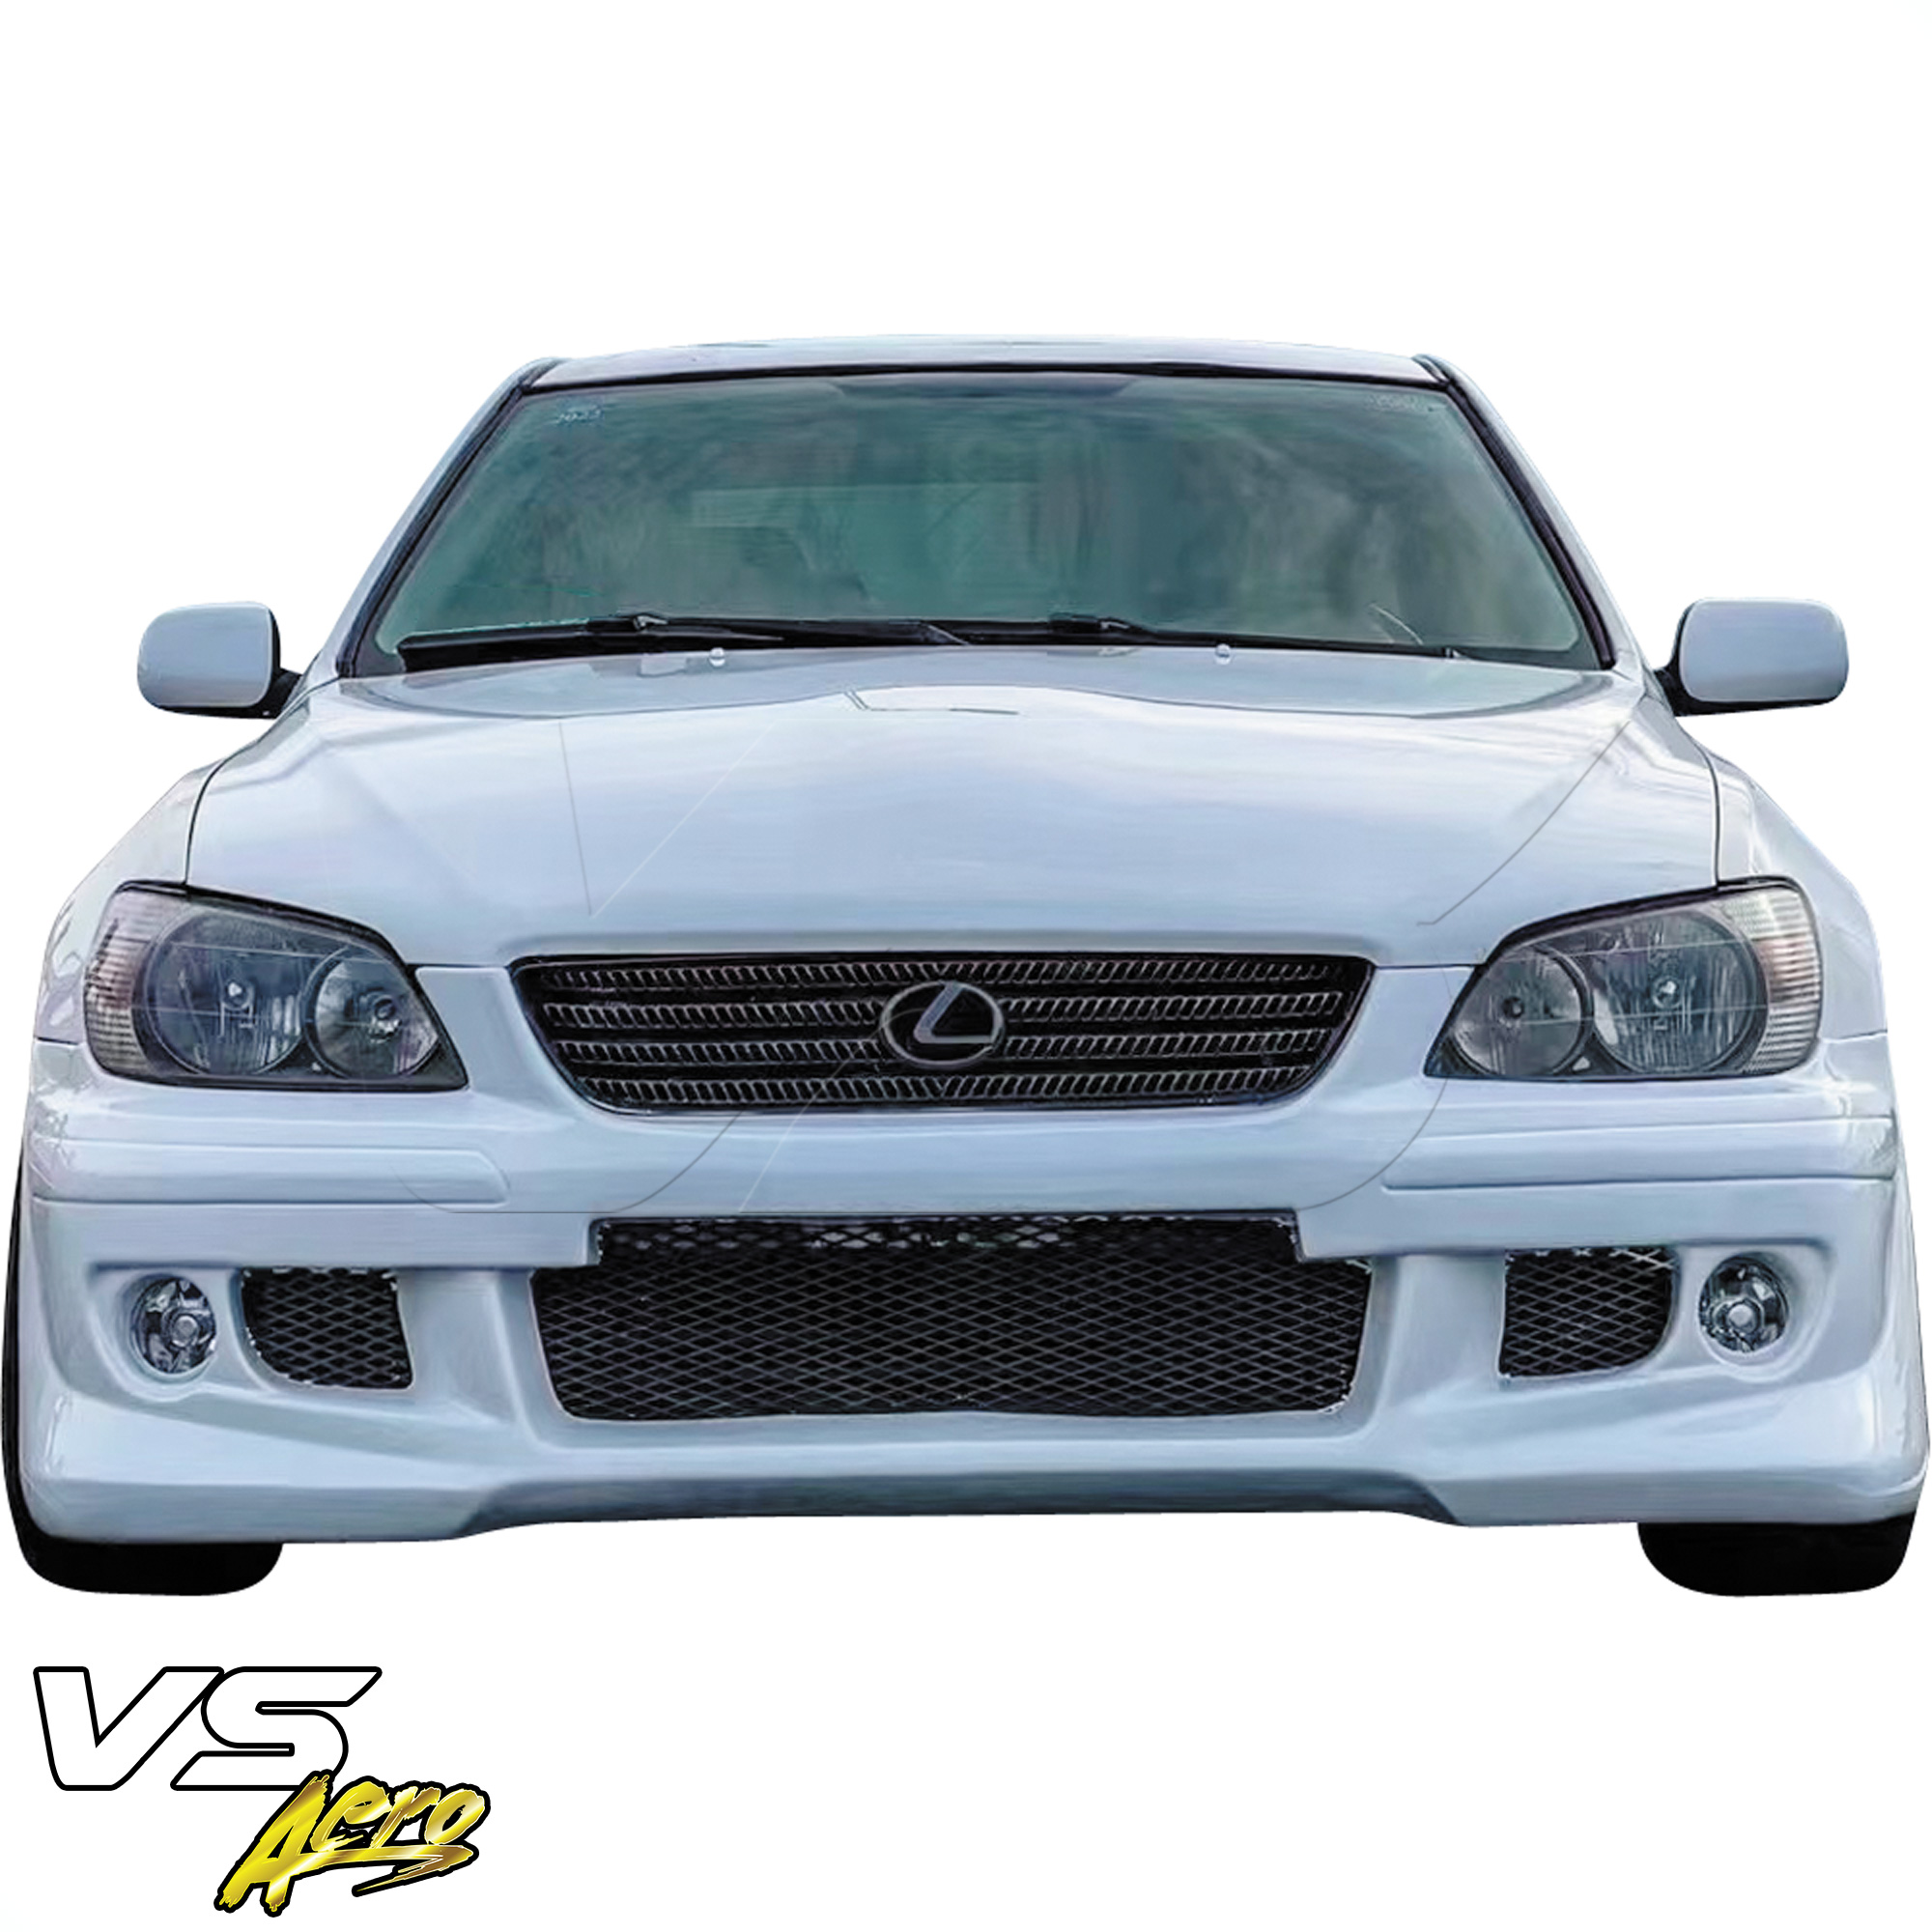 VSaero FRP HKES Front Bumper > Lexus IS Series IS300 SXE10 2001-2005 - Image 3